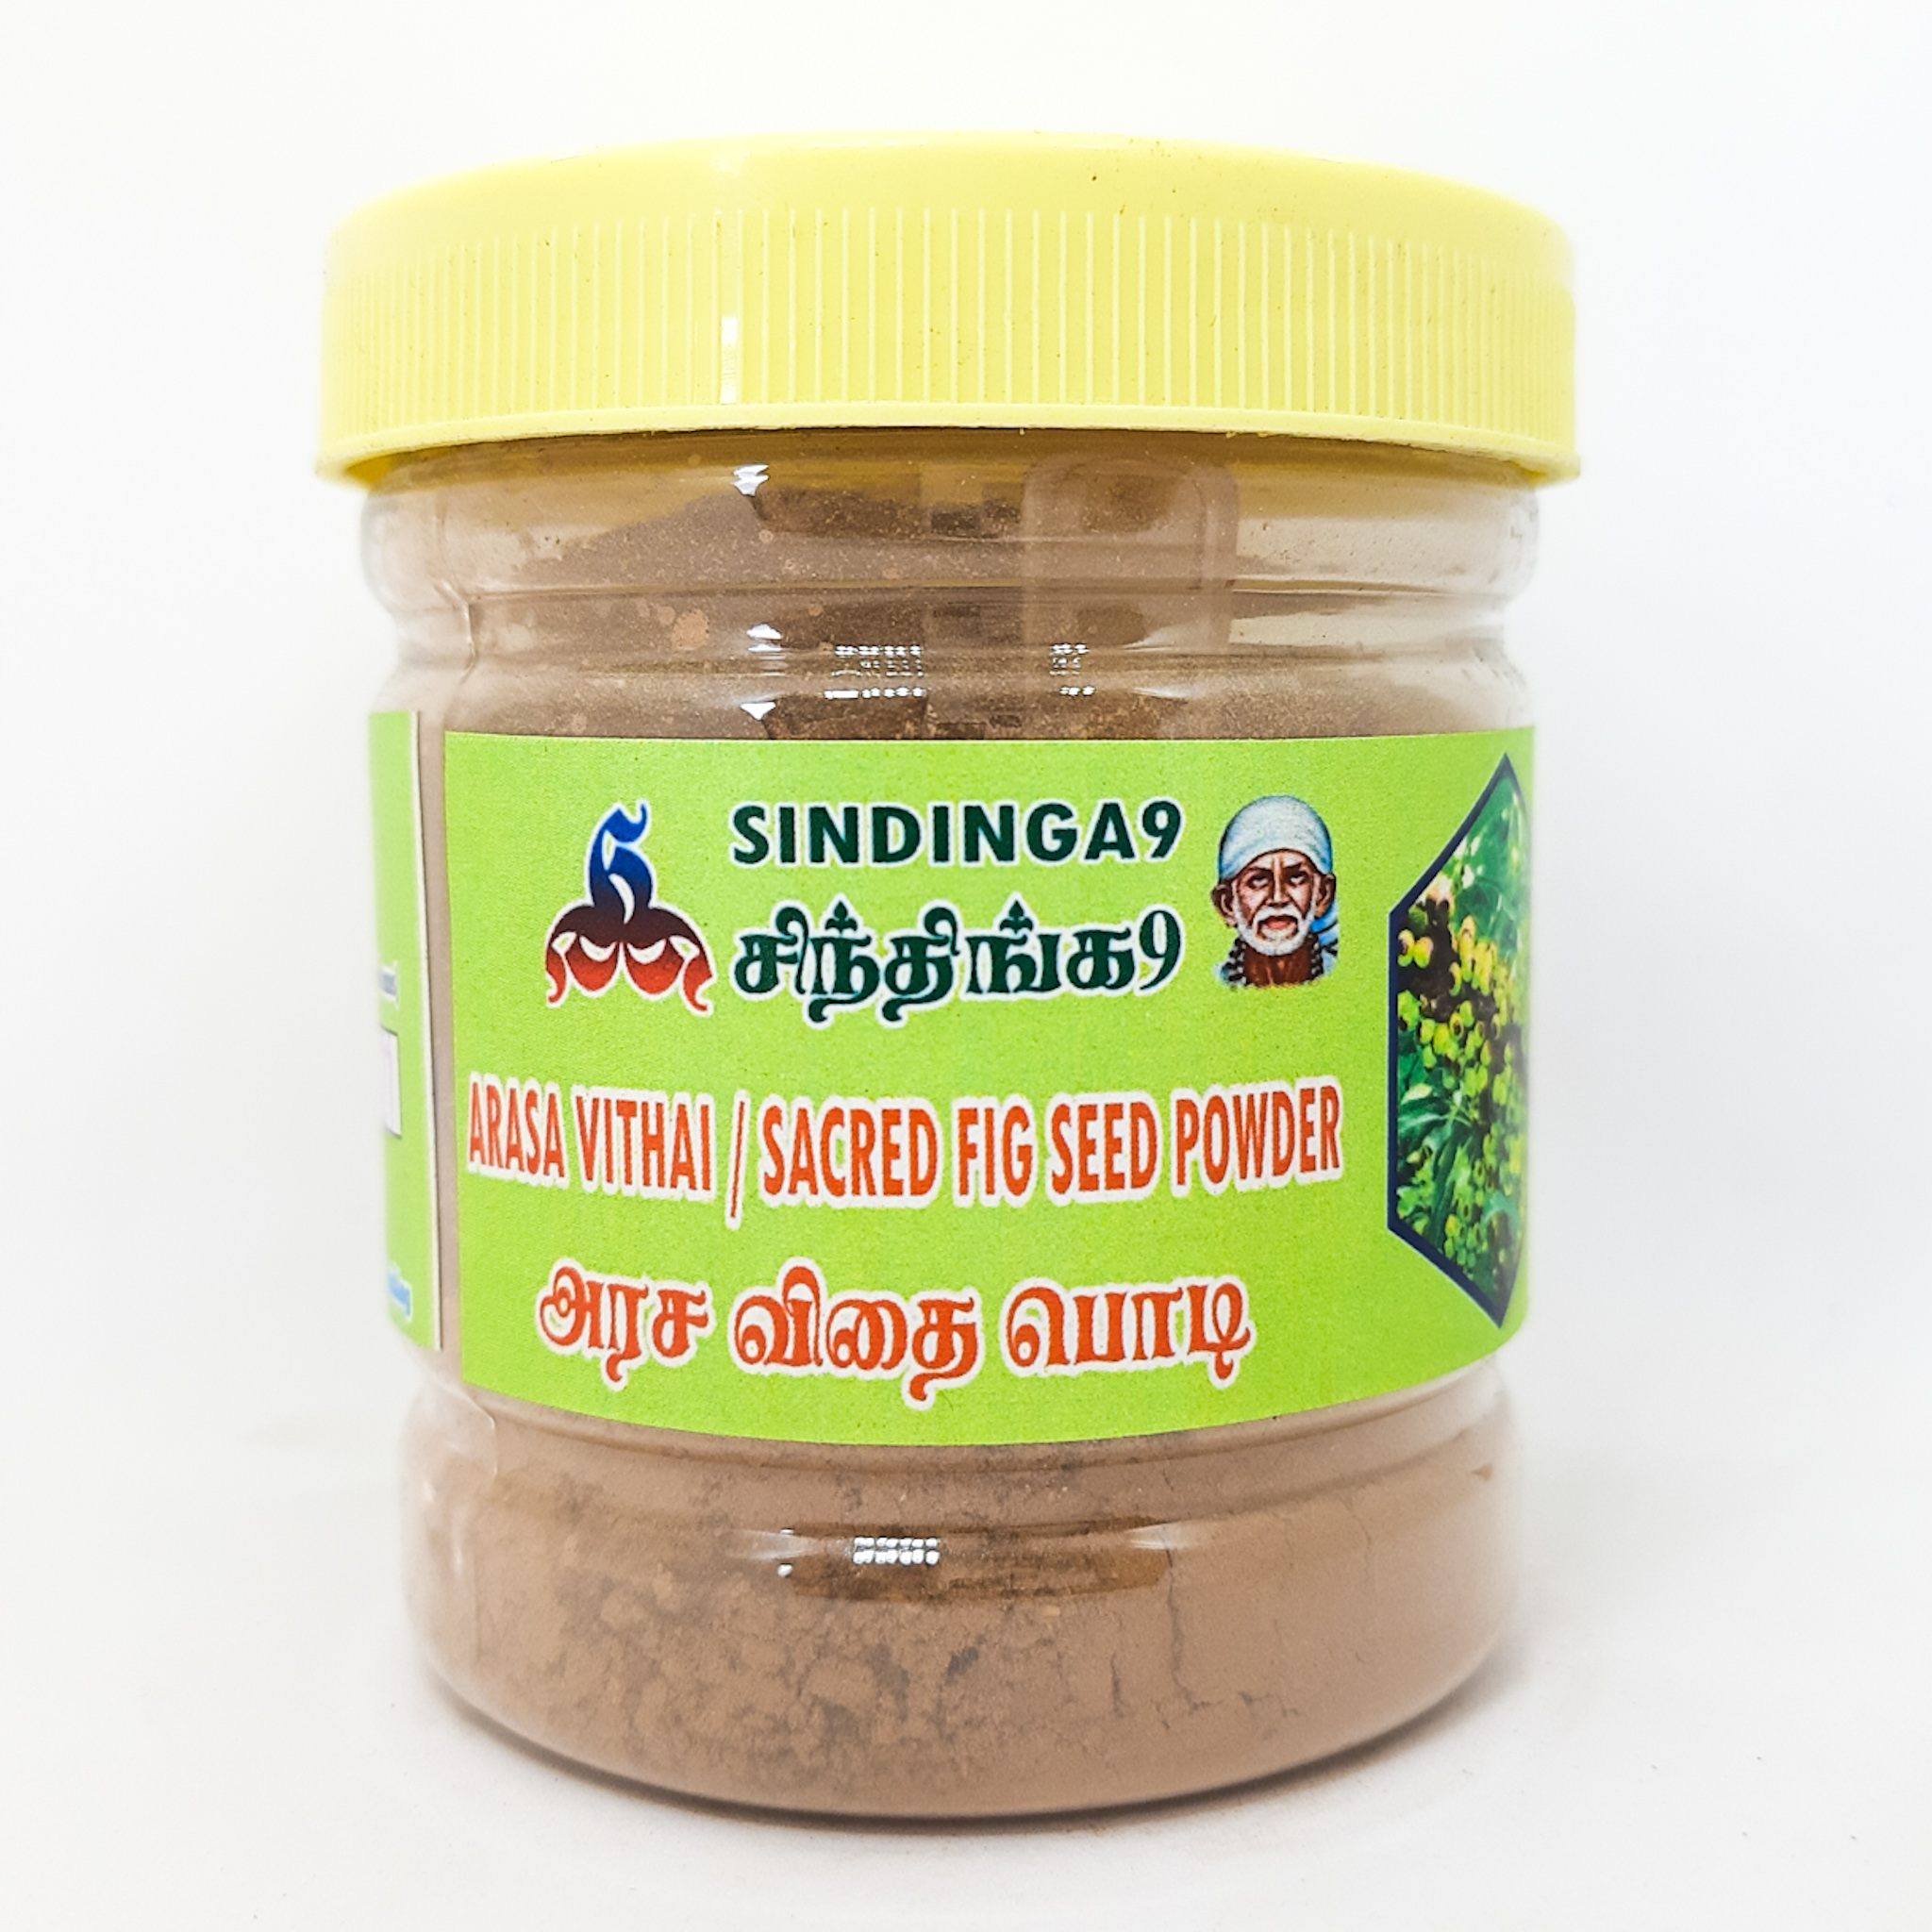 Arasa vithai / sacred fig seed powder  100g